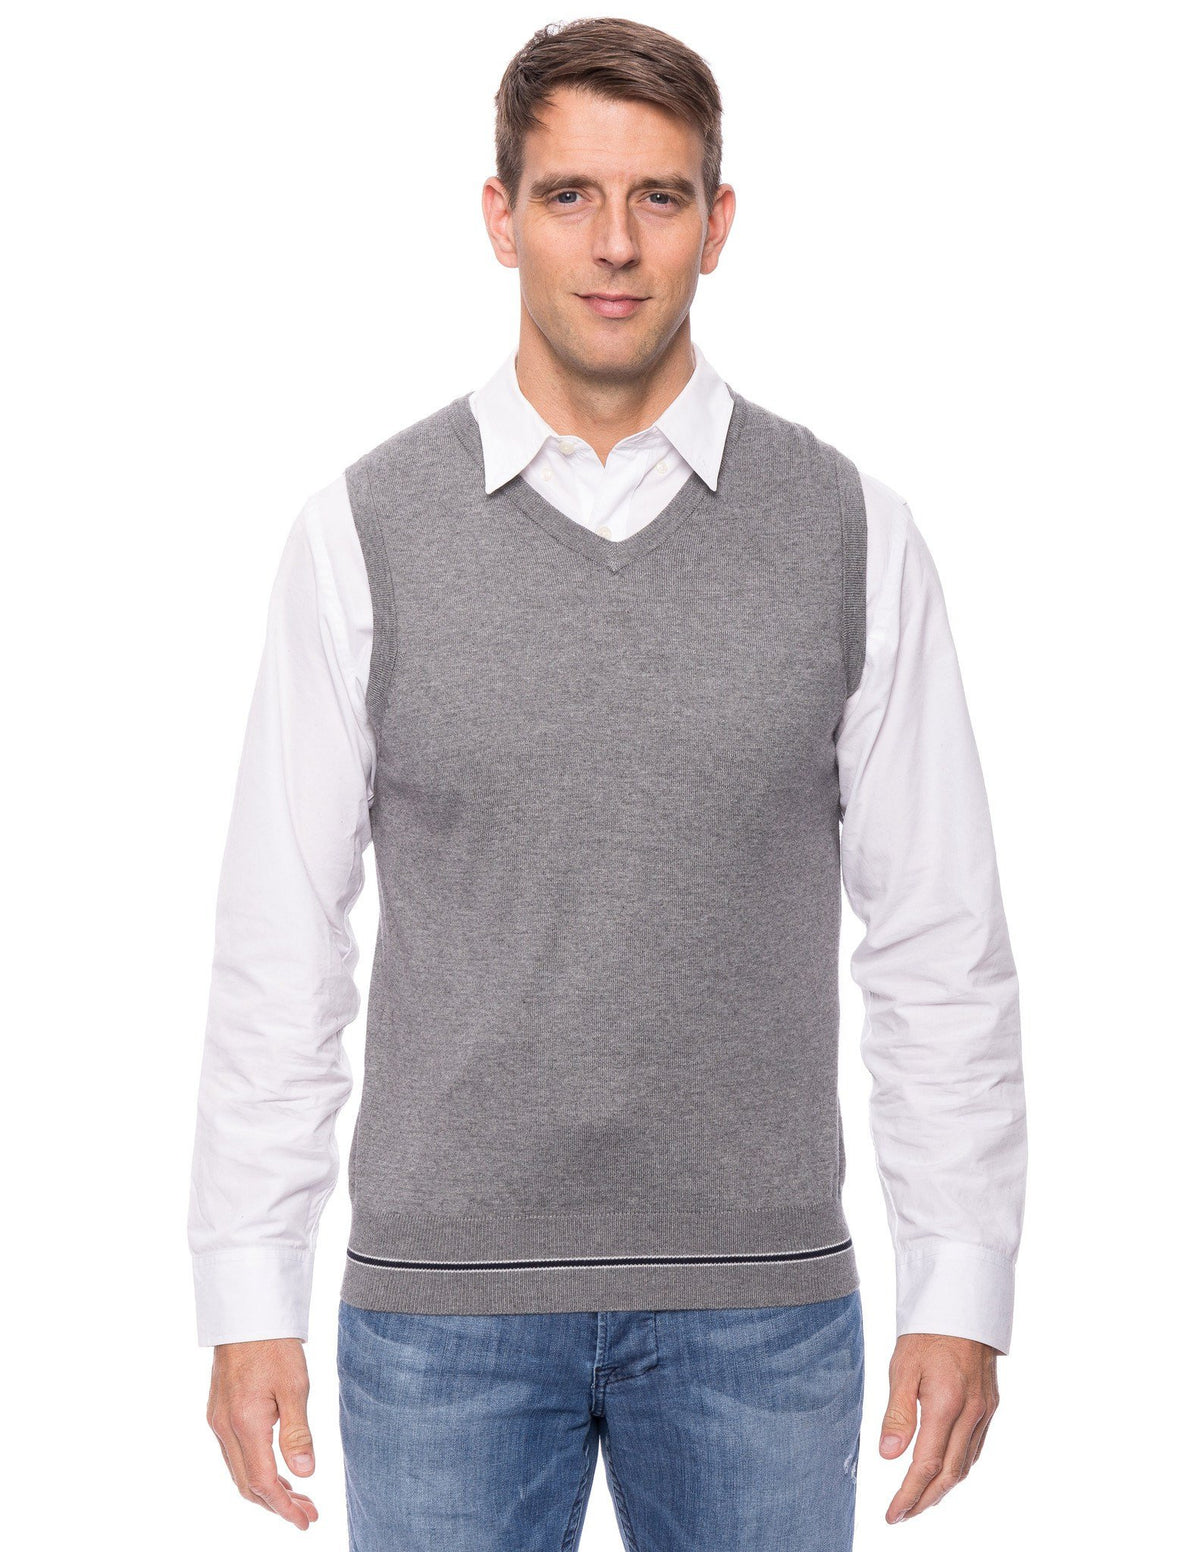 Gift Packaged Men's Cashmere Blend Sweater Vest - Heather Grey